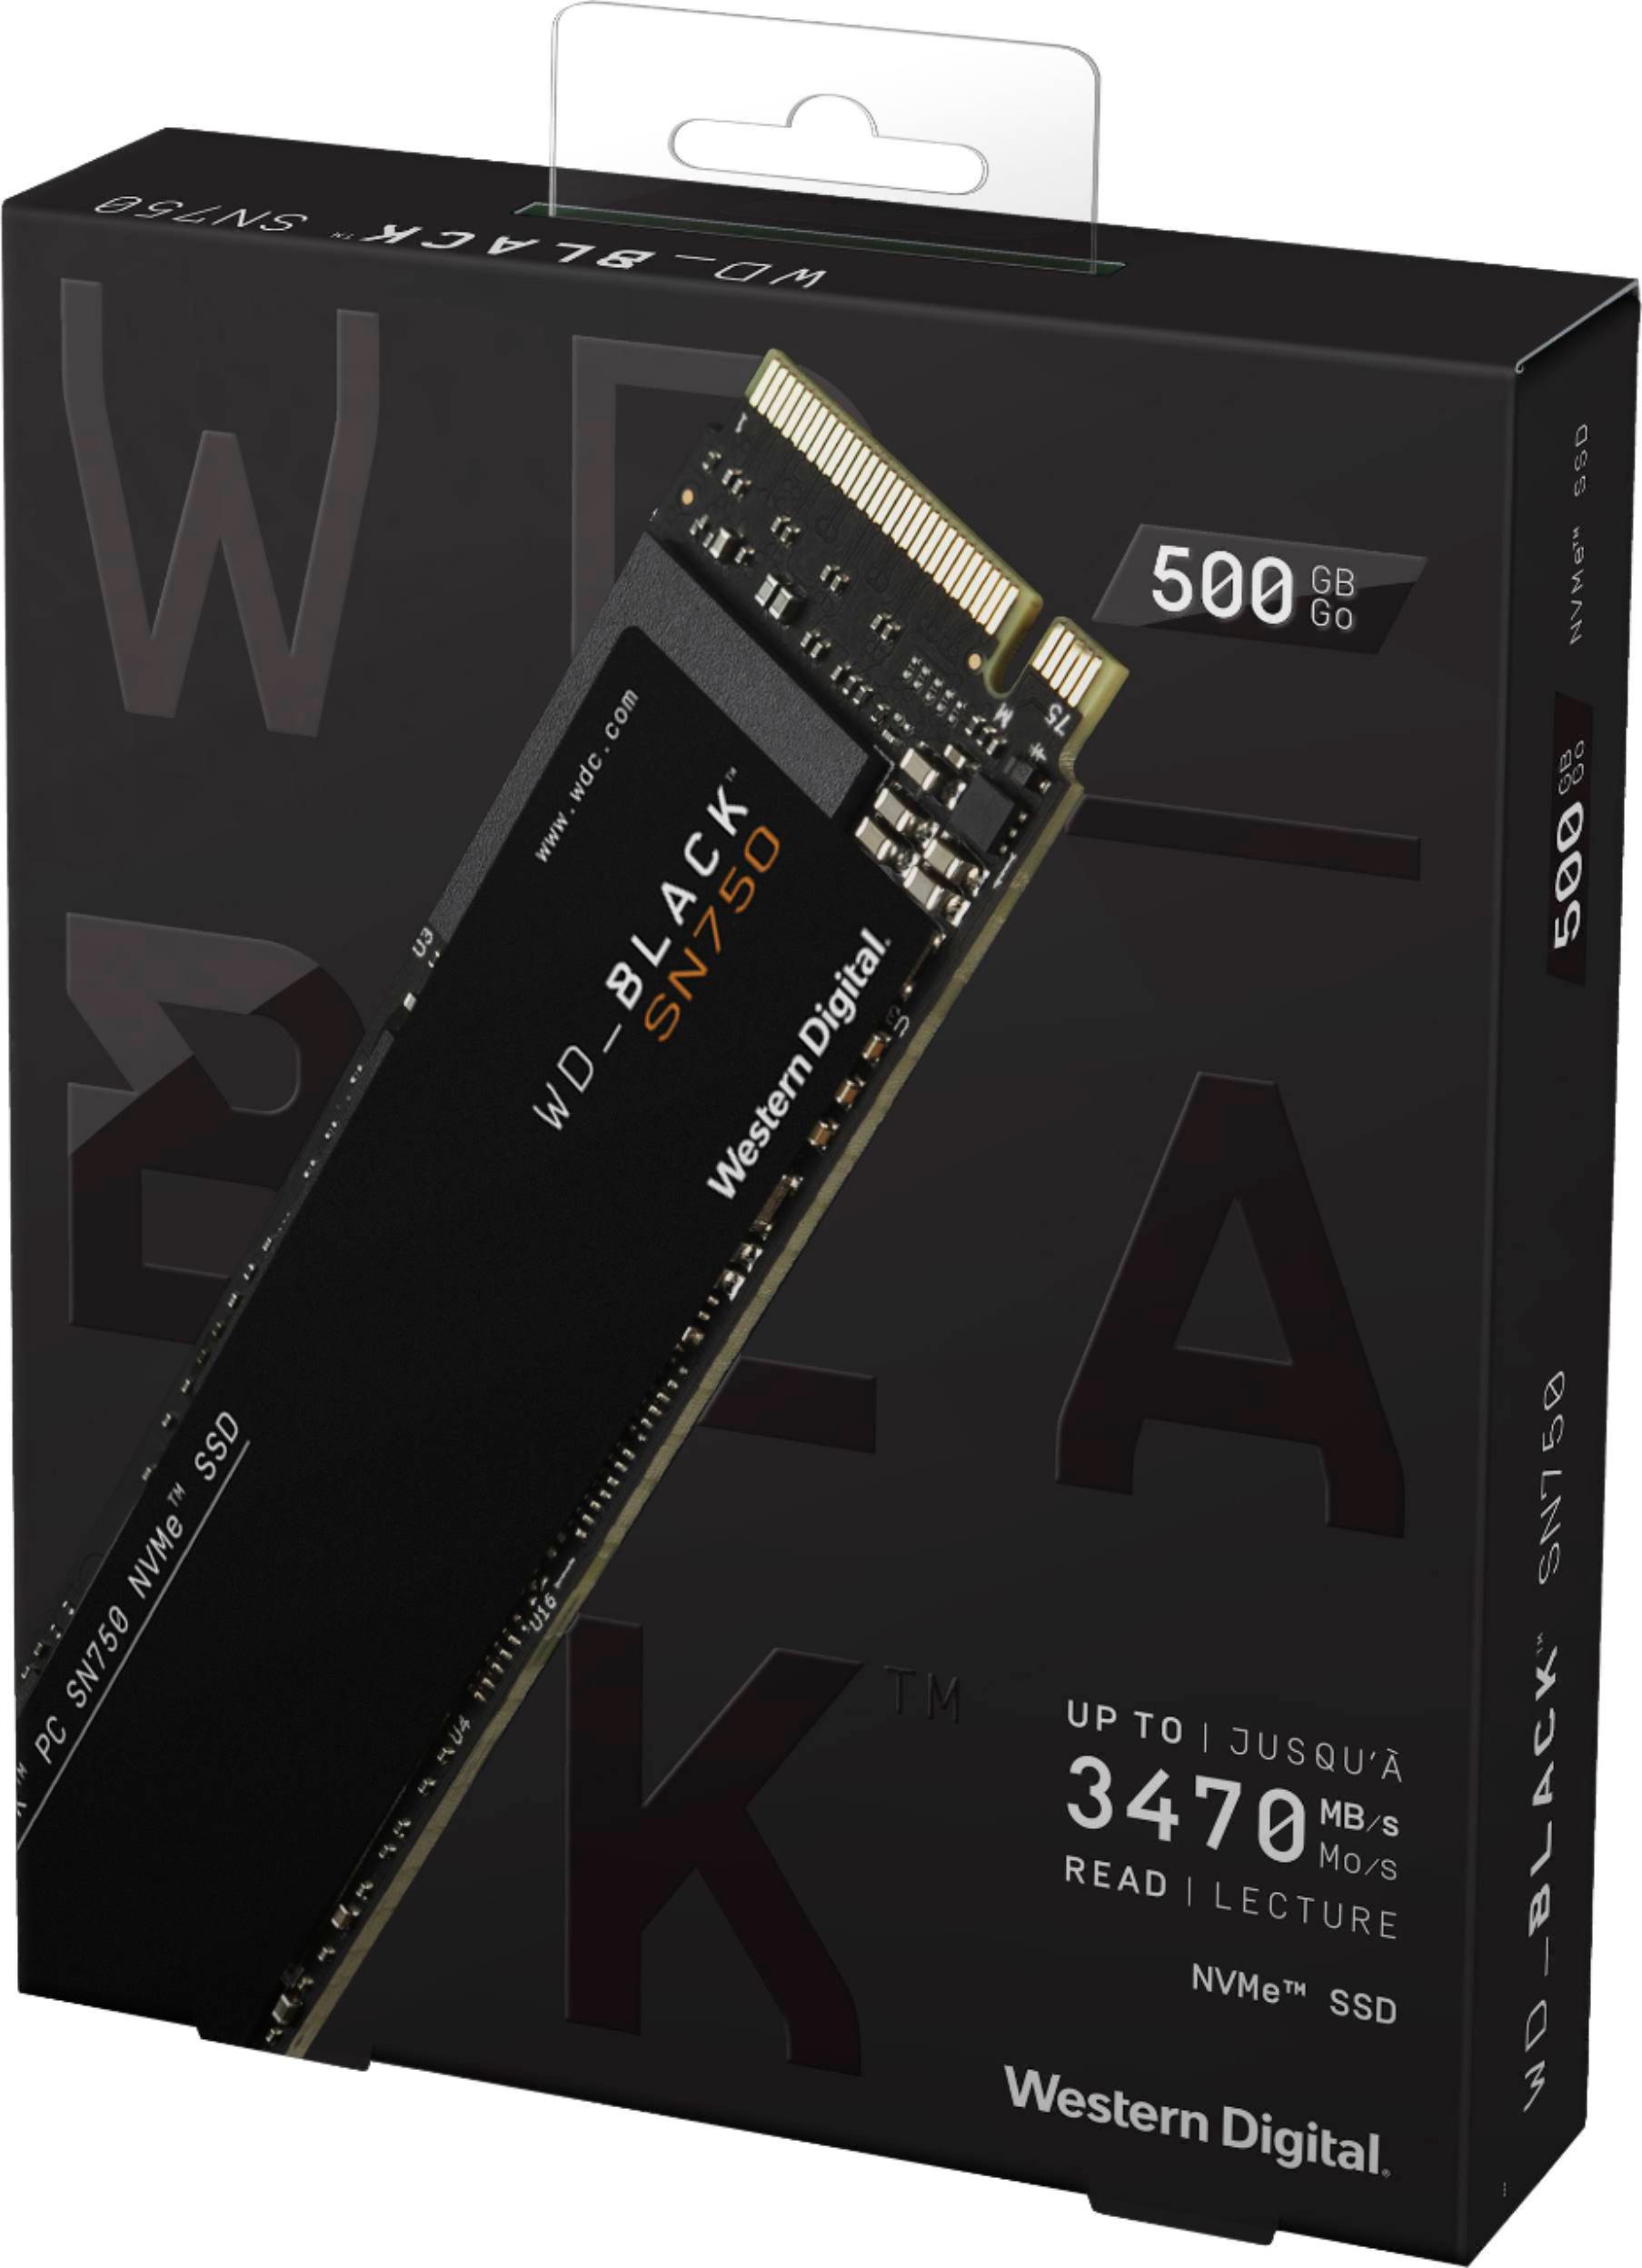 Wd Wd Black Sn750 Nvme 500gb Internal Pcie Gen 3 X 4 Solid State Drive For Laptops Desktops Wdbrpg5000anc Wrsn Best Buy